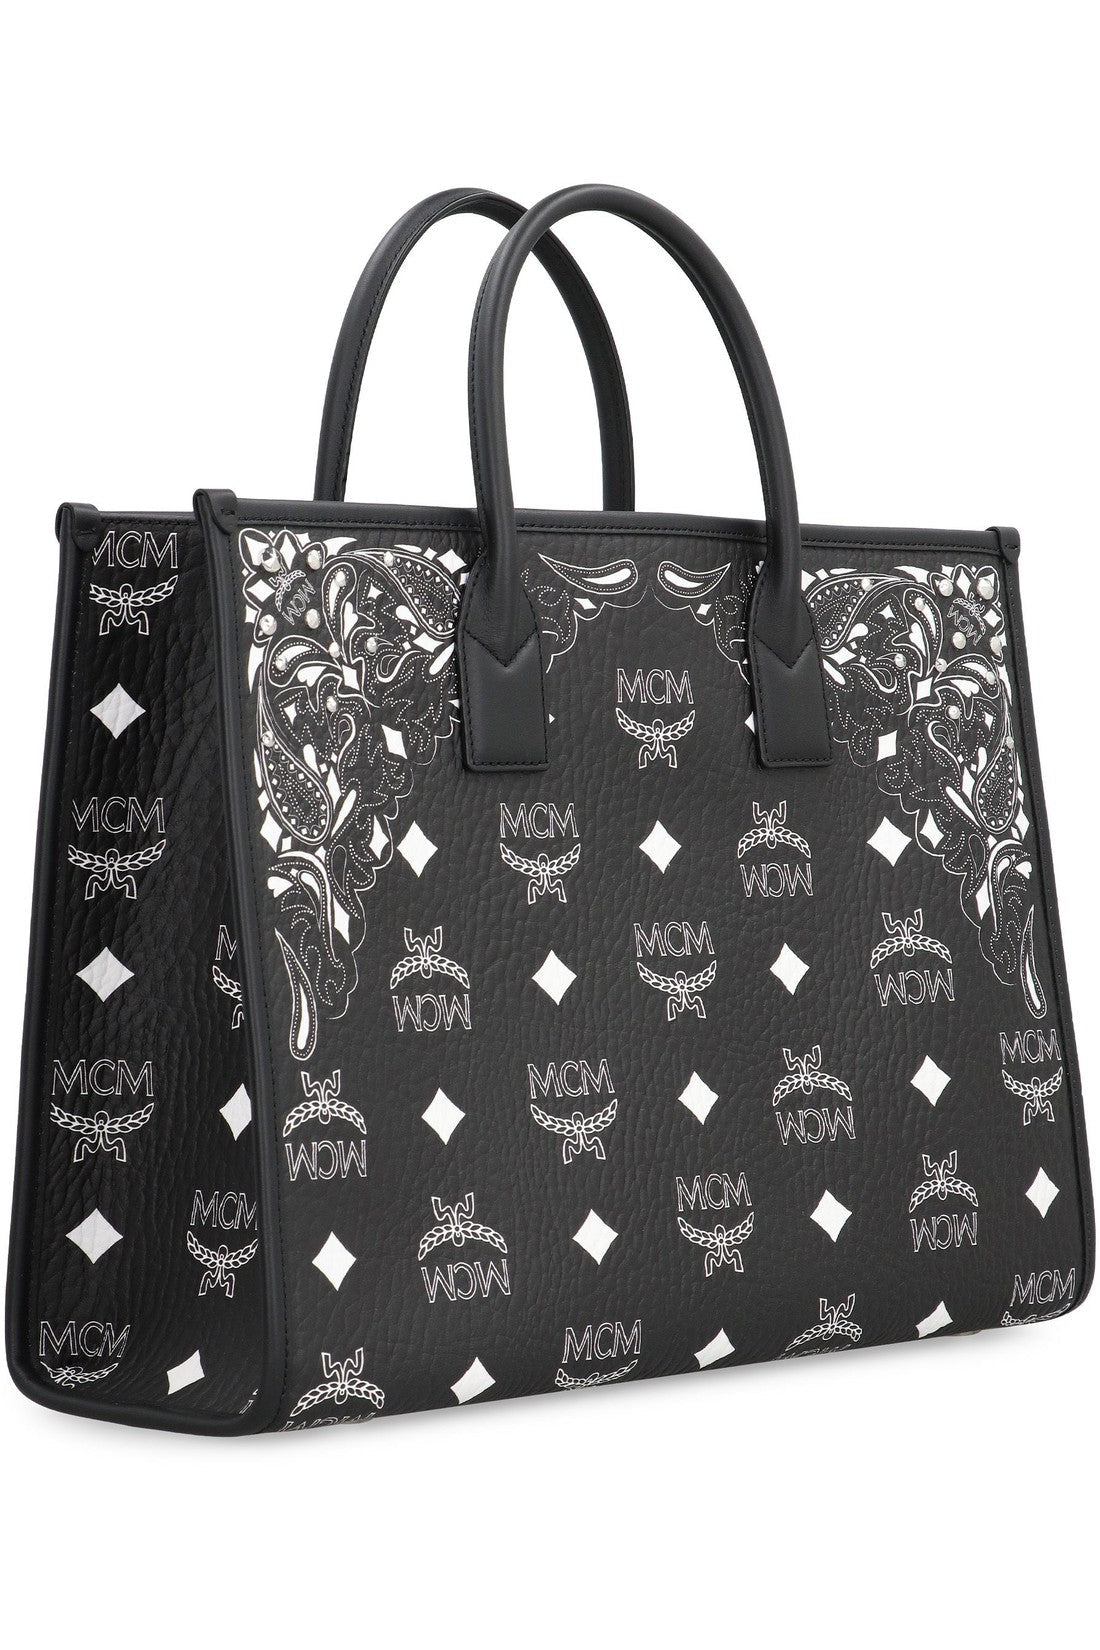 mcm handbag | eBay